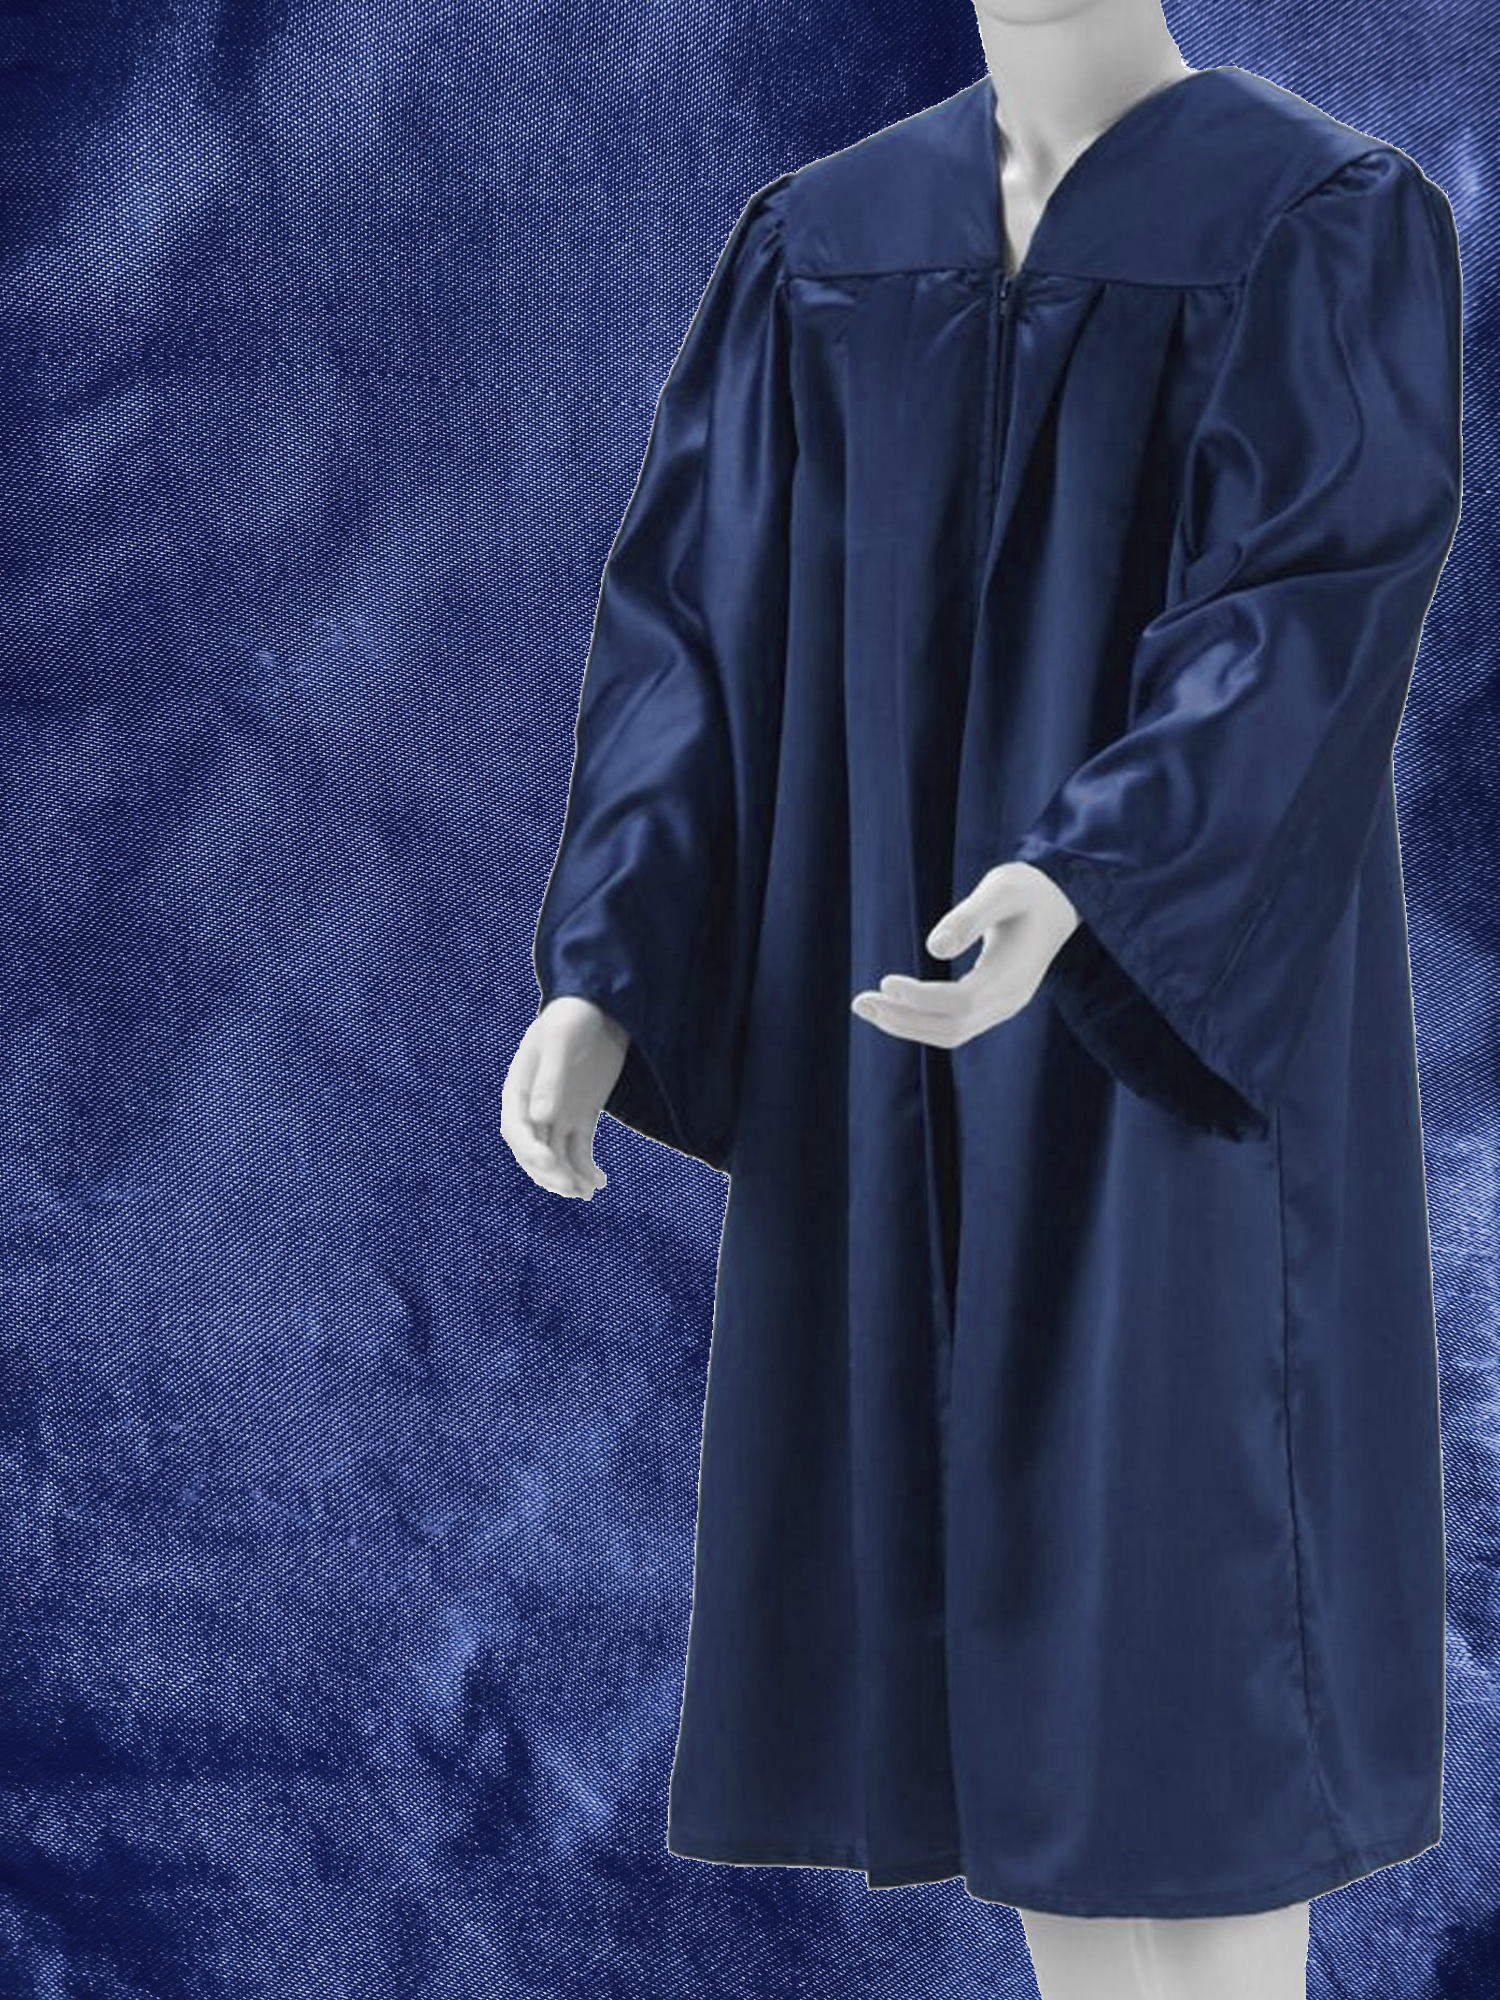 Kokott Robe Marineblau, glänzend, Graduation Gown, Chorrobe